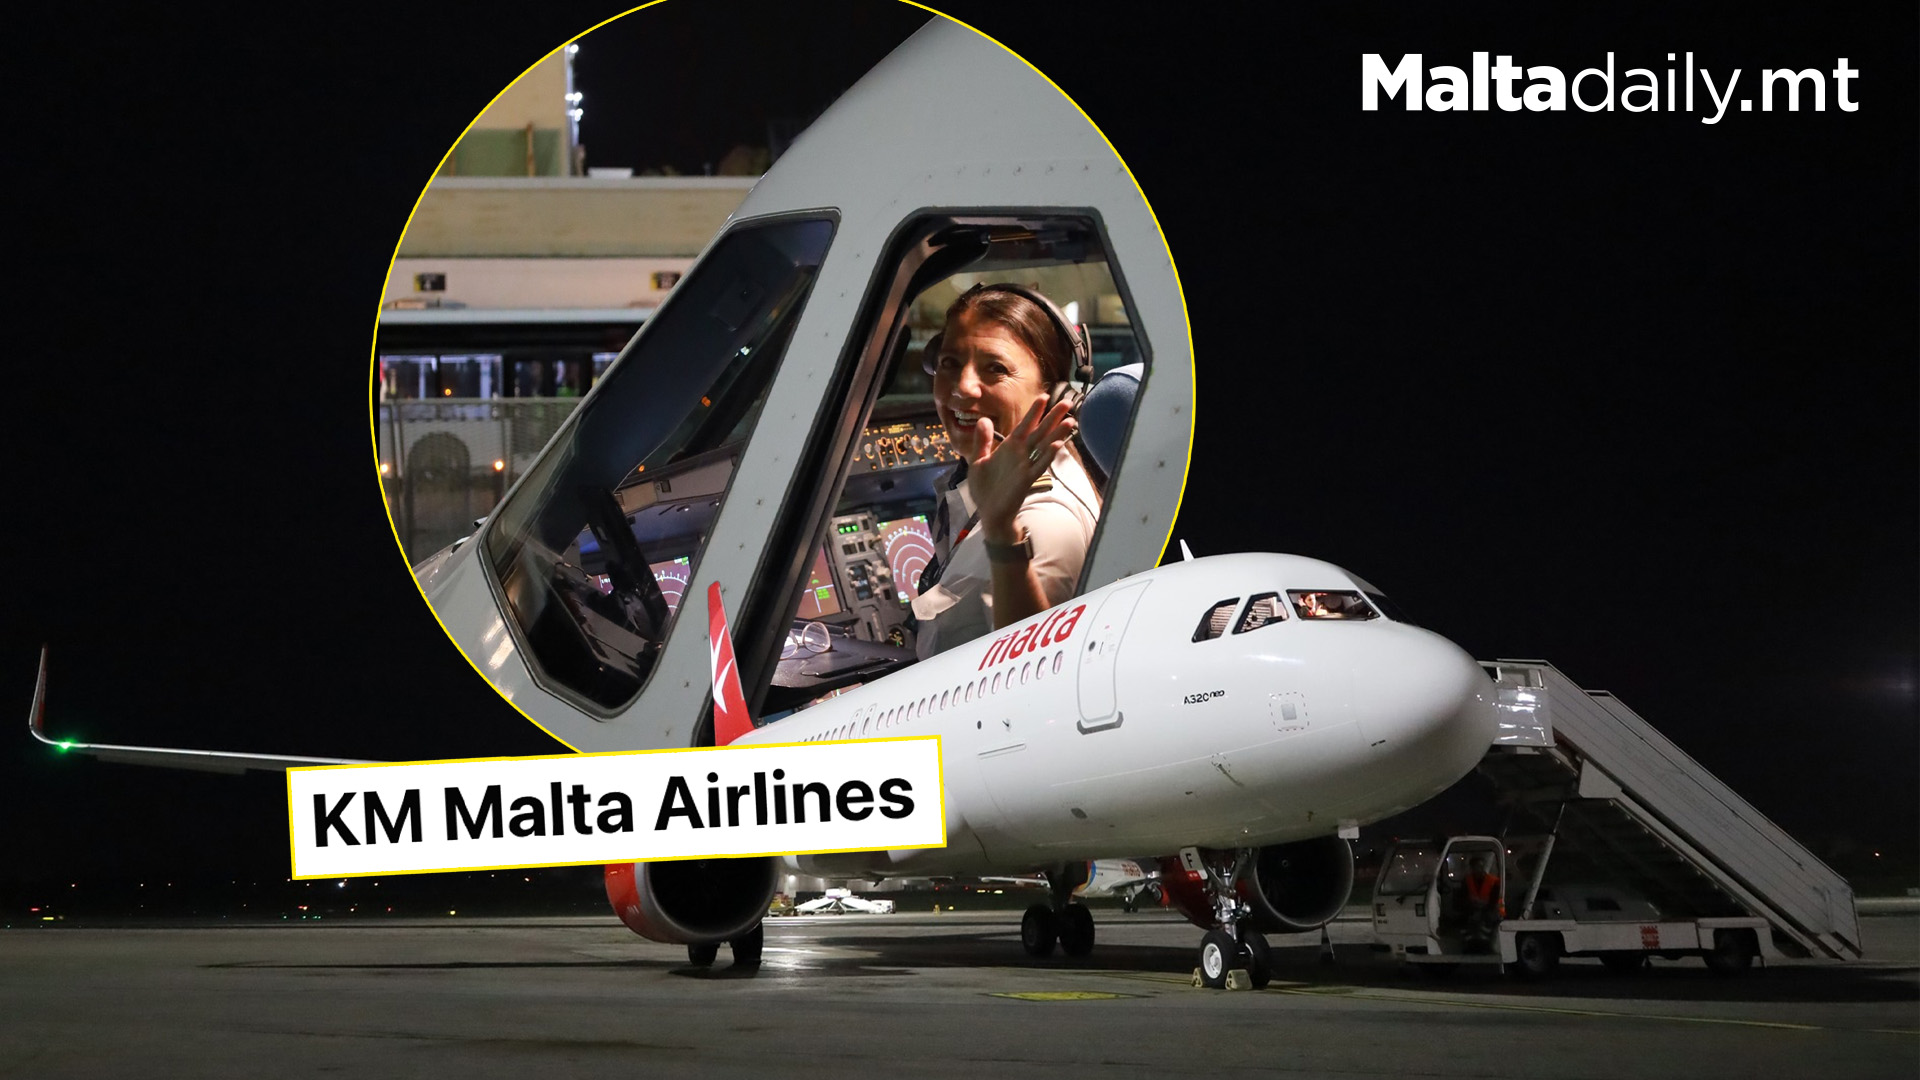 Malta’s New Airline Officially Kicks Off Flights Today